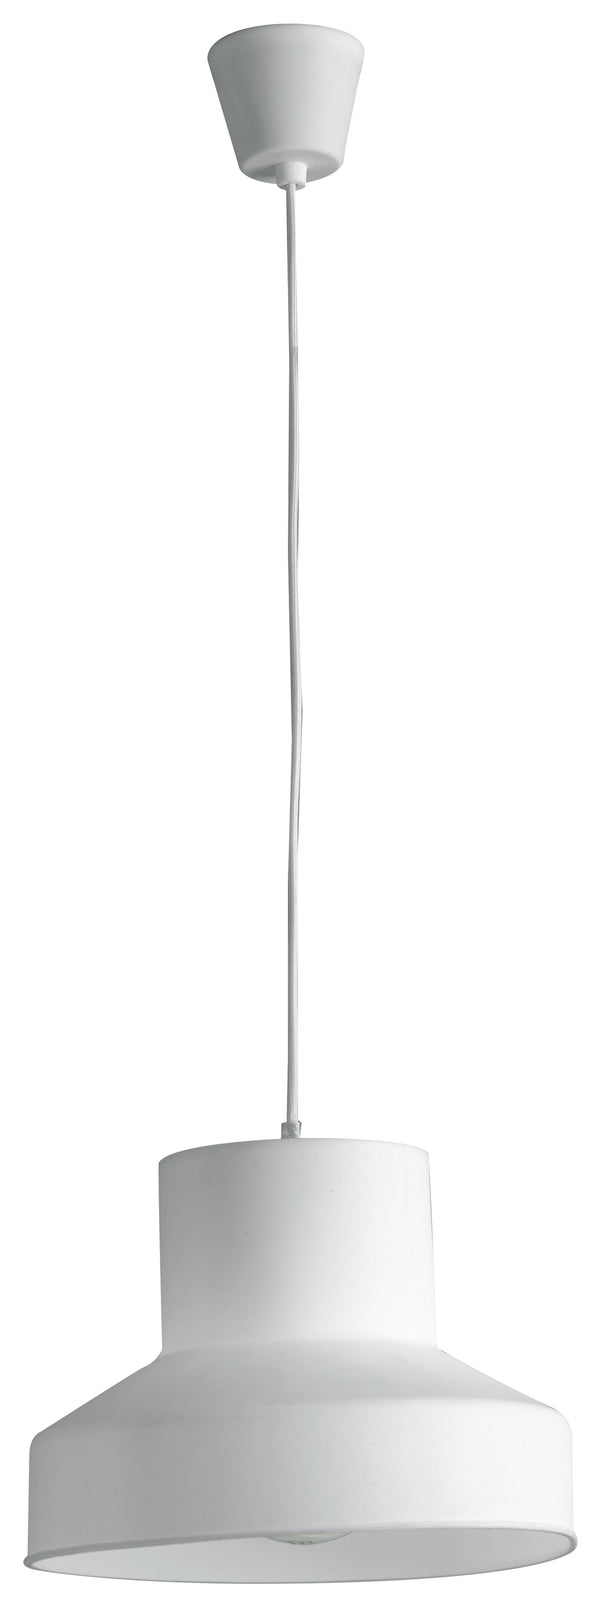 Lustre moderne à suspension en silicone blanc E27 acquista